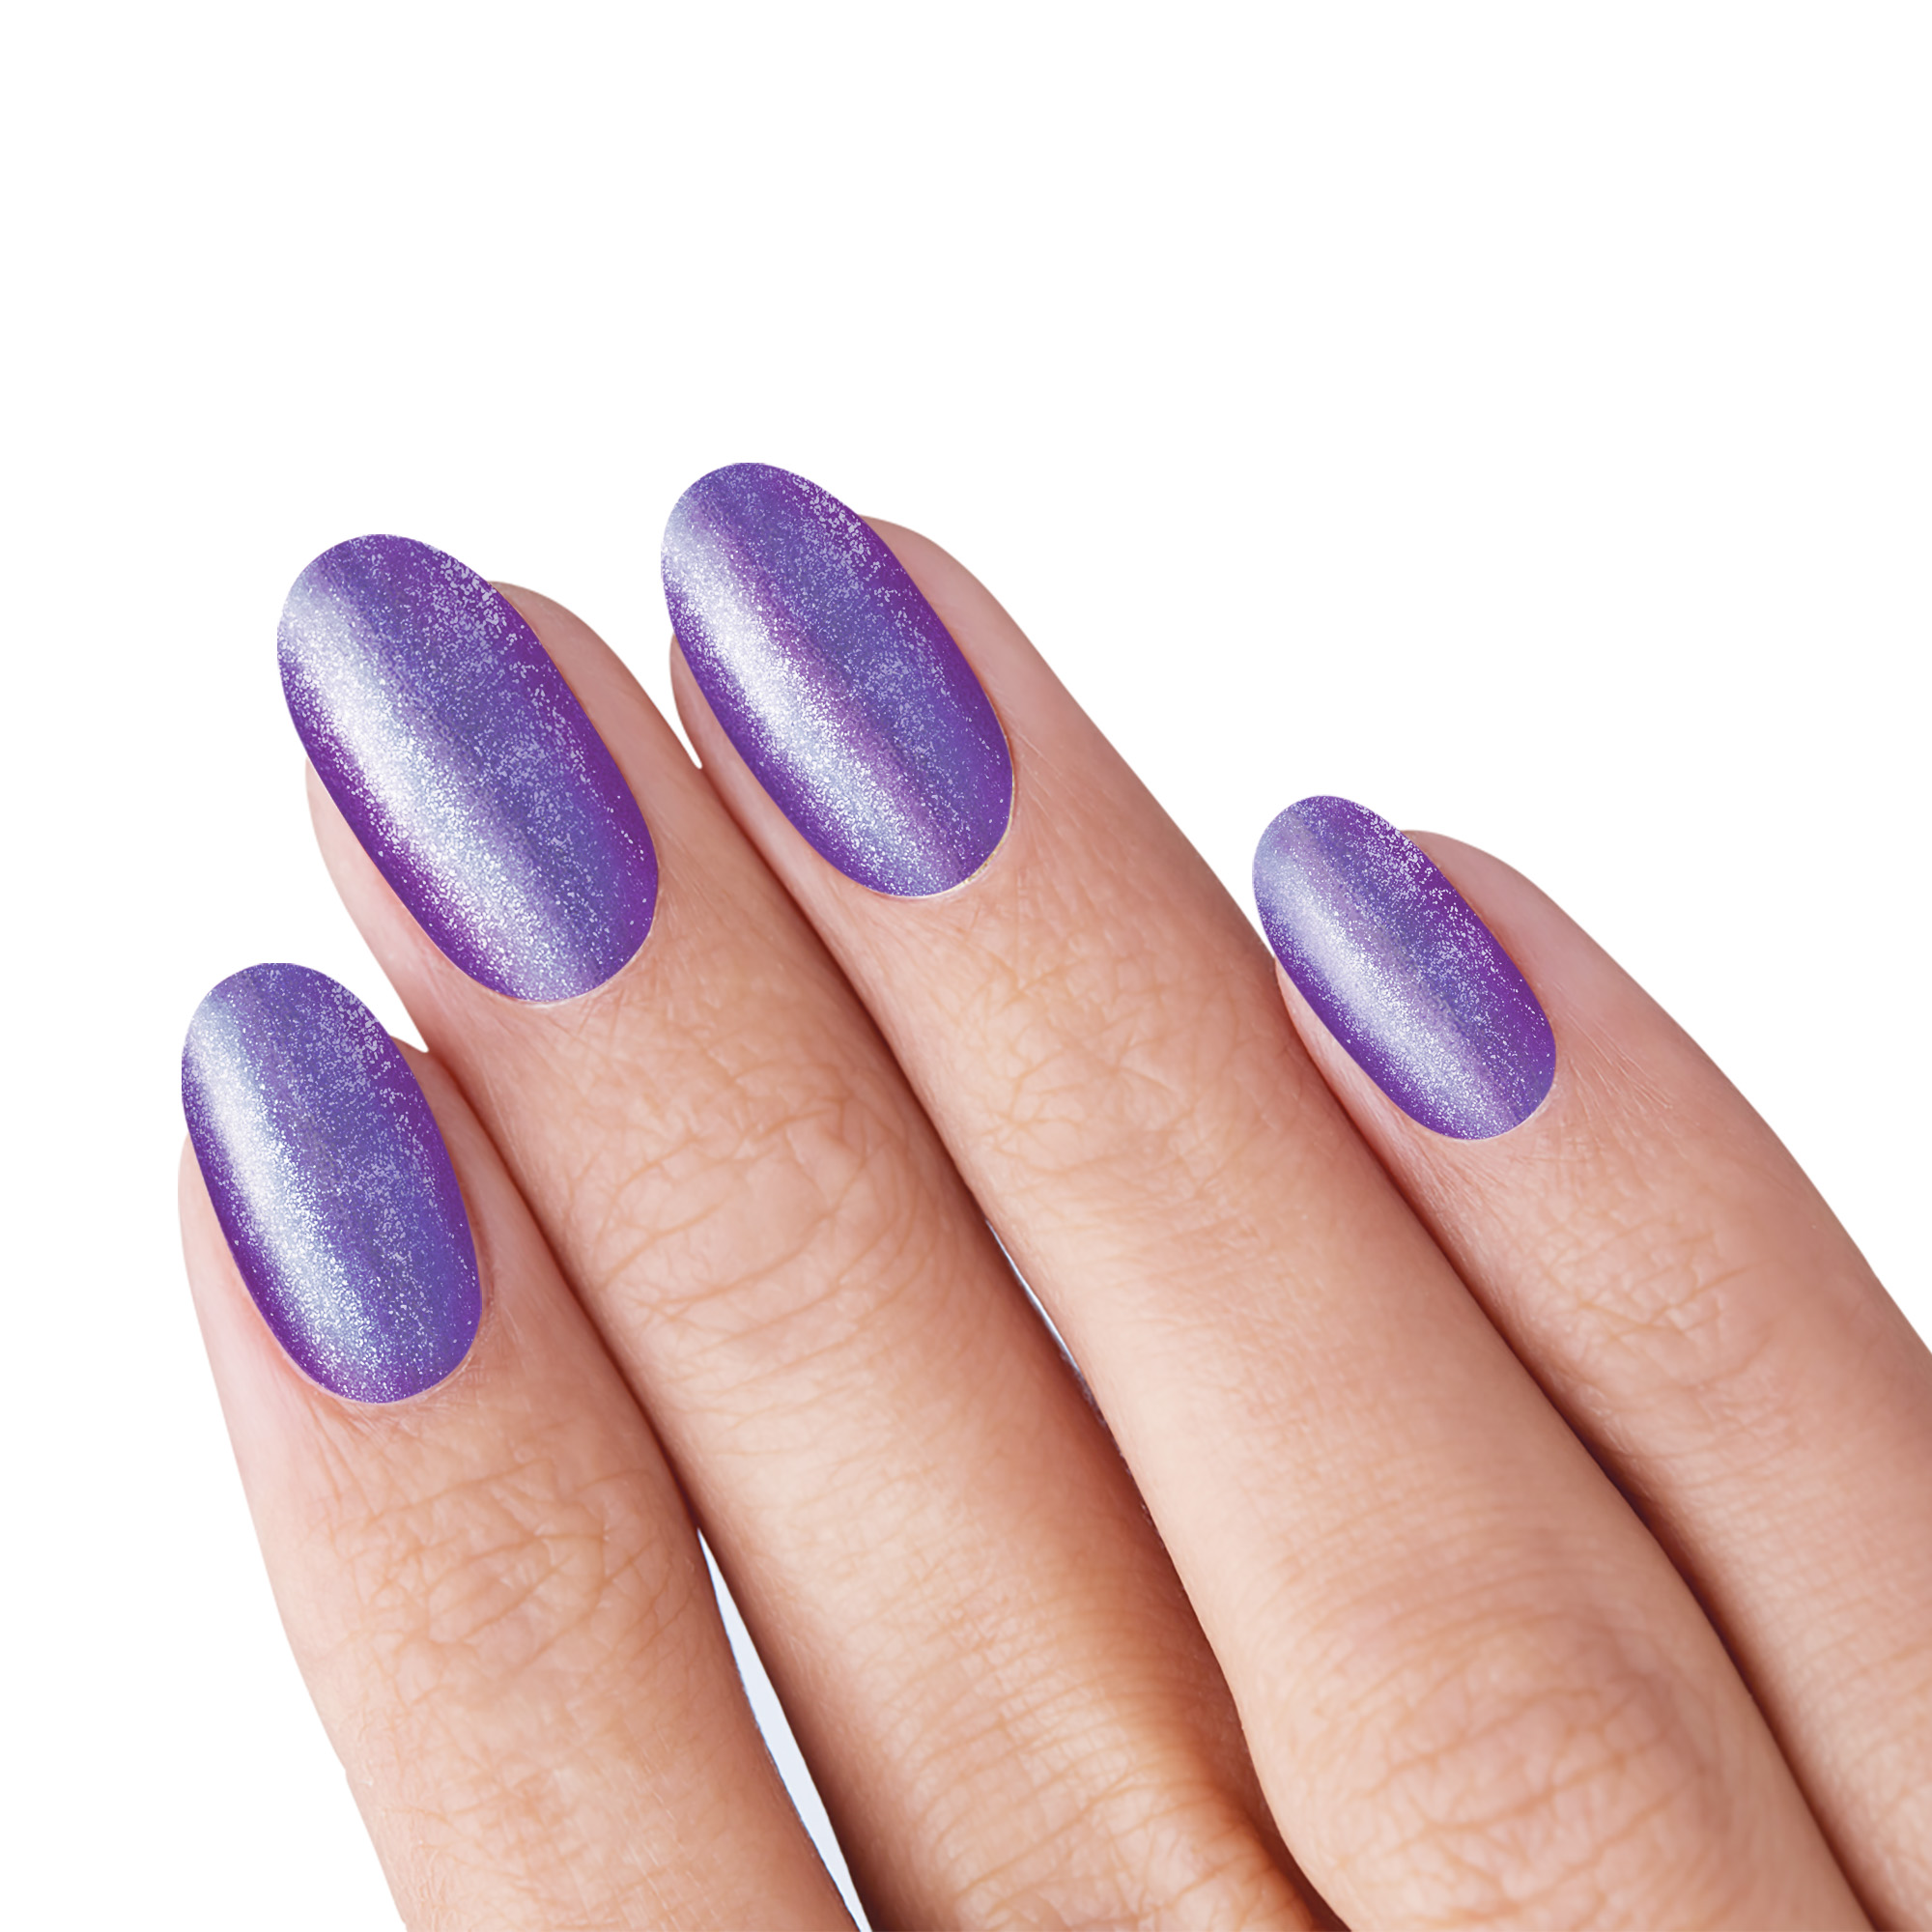 Semi-permanent nail polish metallic violet Dedalo 10 ml Laqerìs TNS